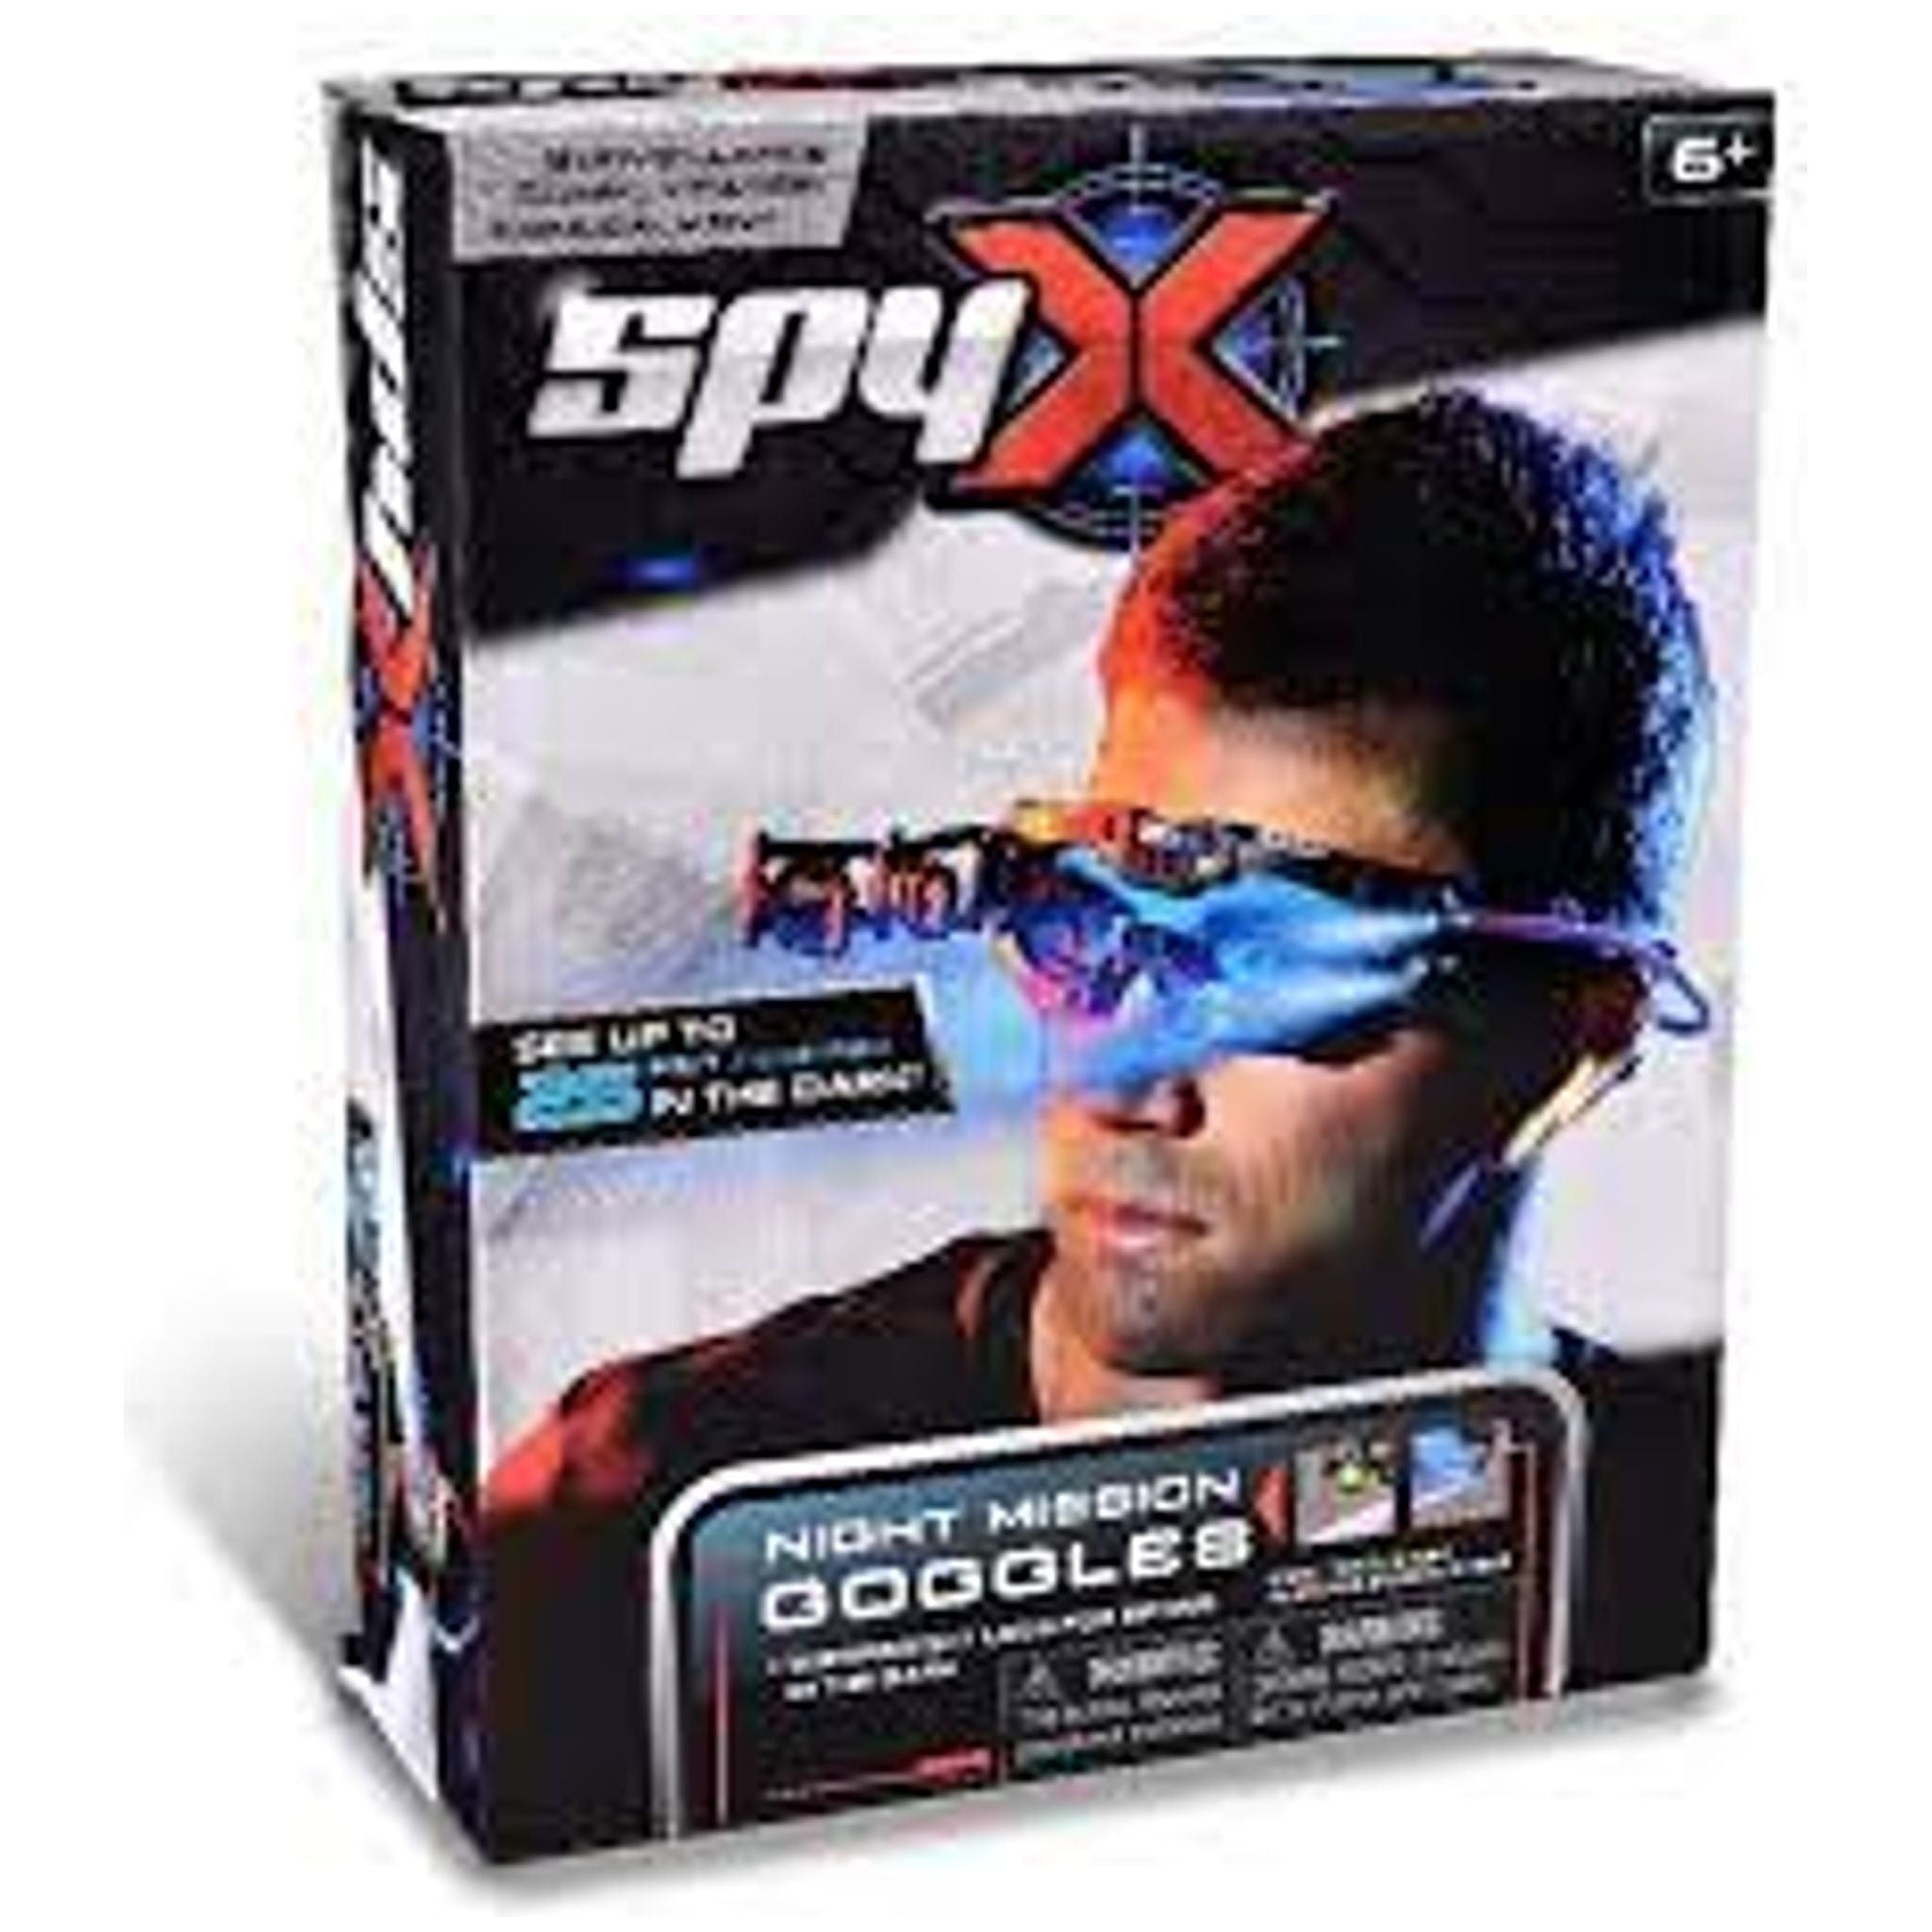 SpyX Night Mission Goggles - Toybox Tales